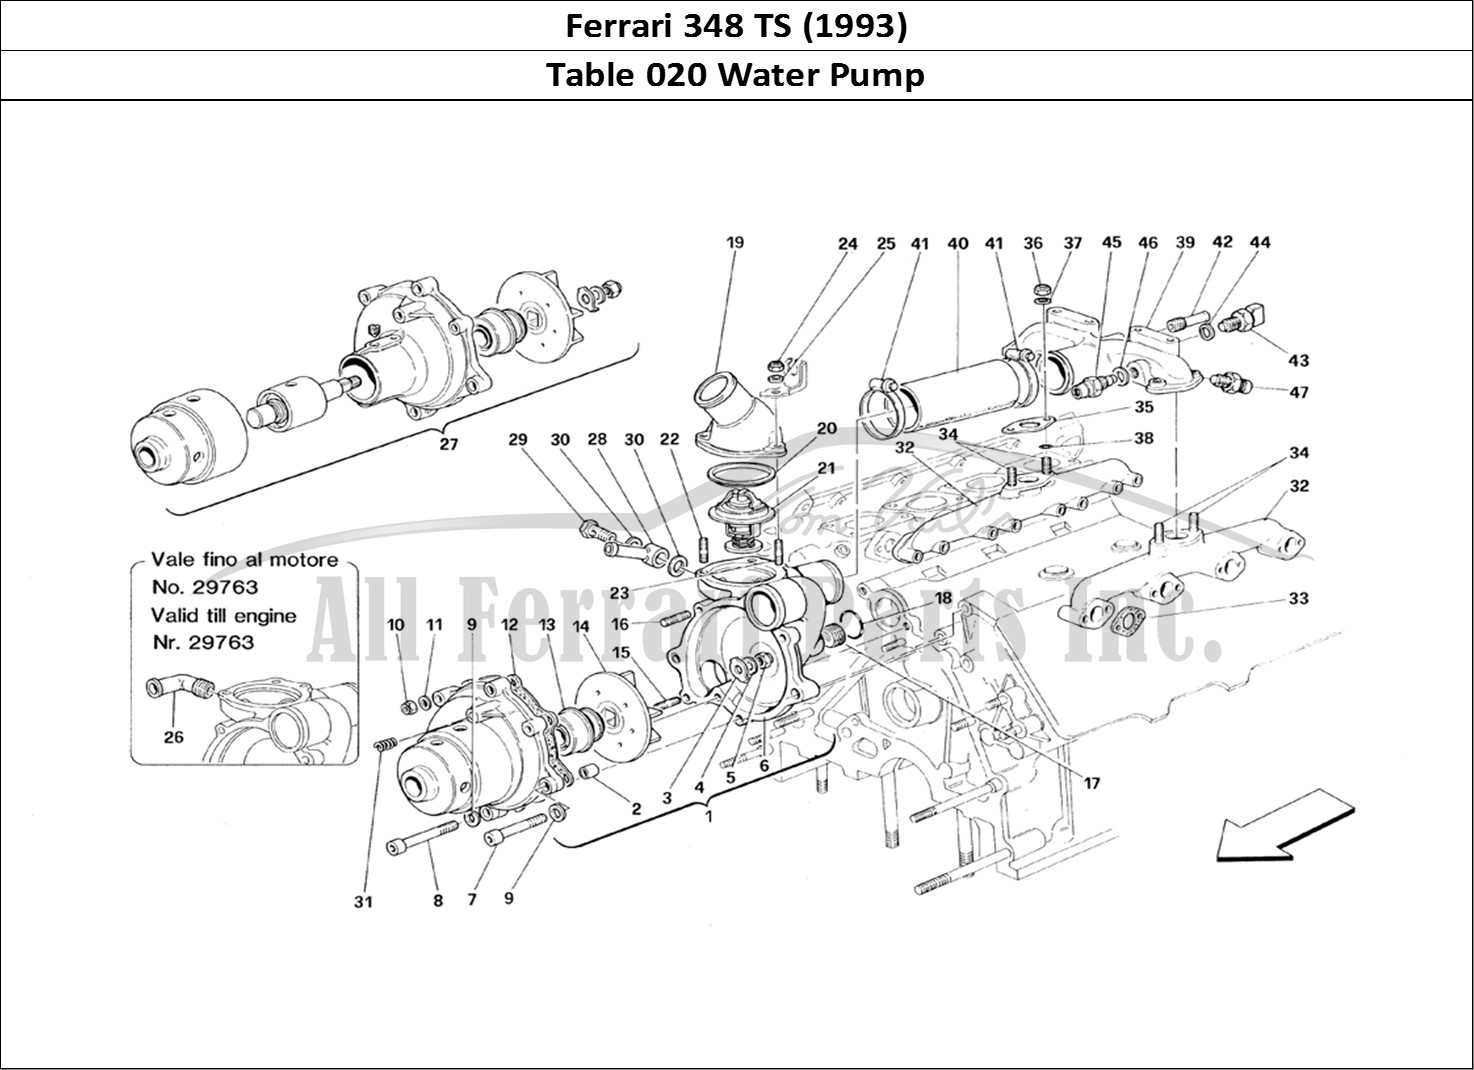 Ferrari Parts Ferrari 348 TB (1993) Page 020 Water Pump